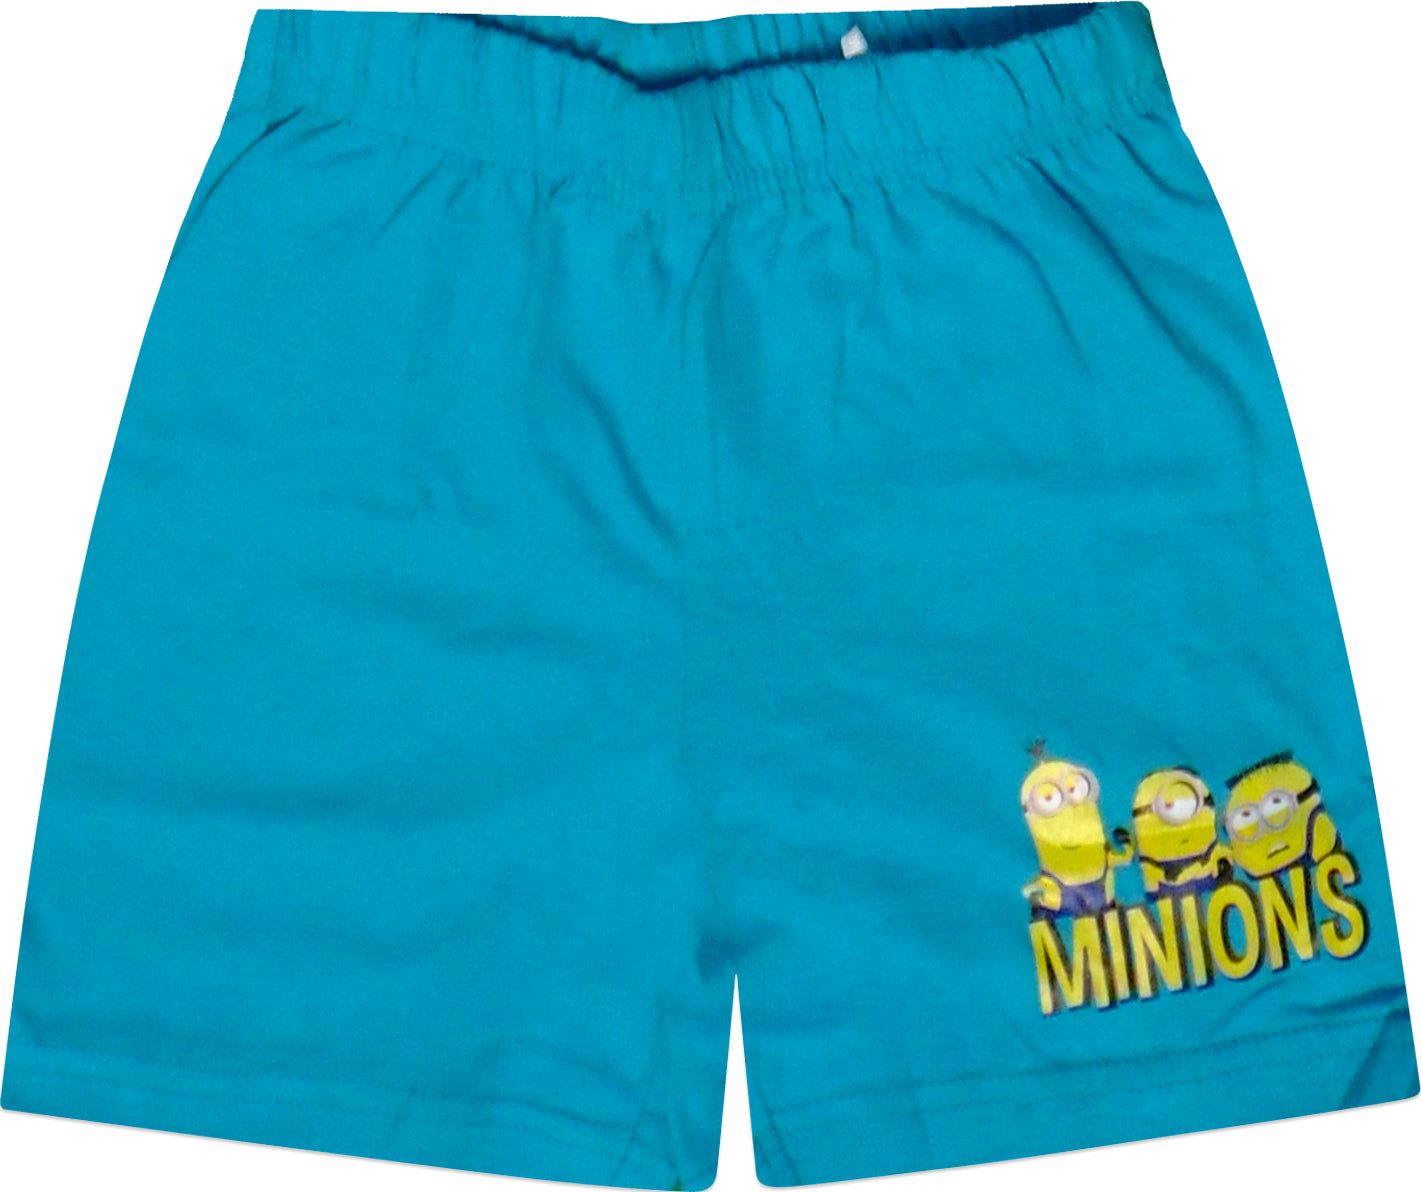 MINIONS Cotton Short Pyjama Set for Kids